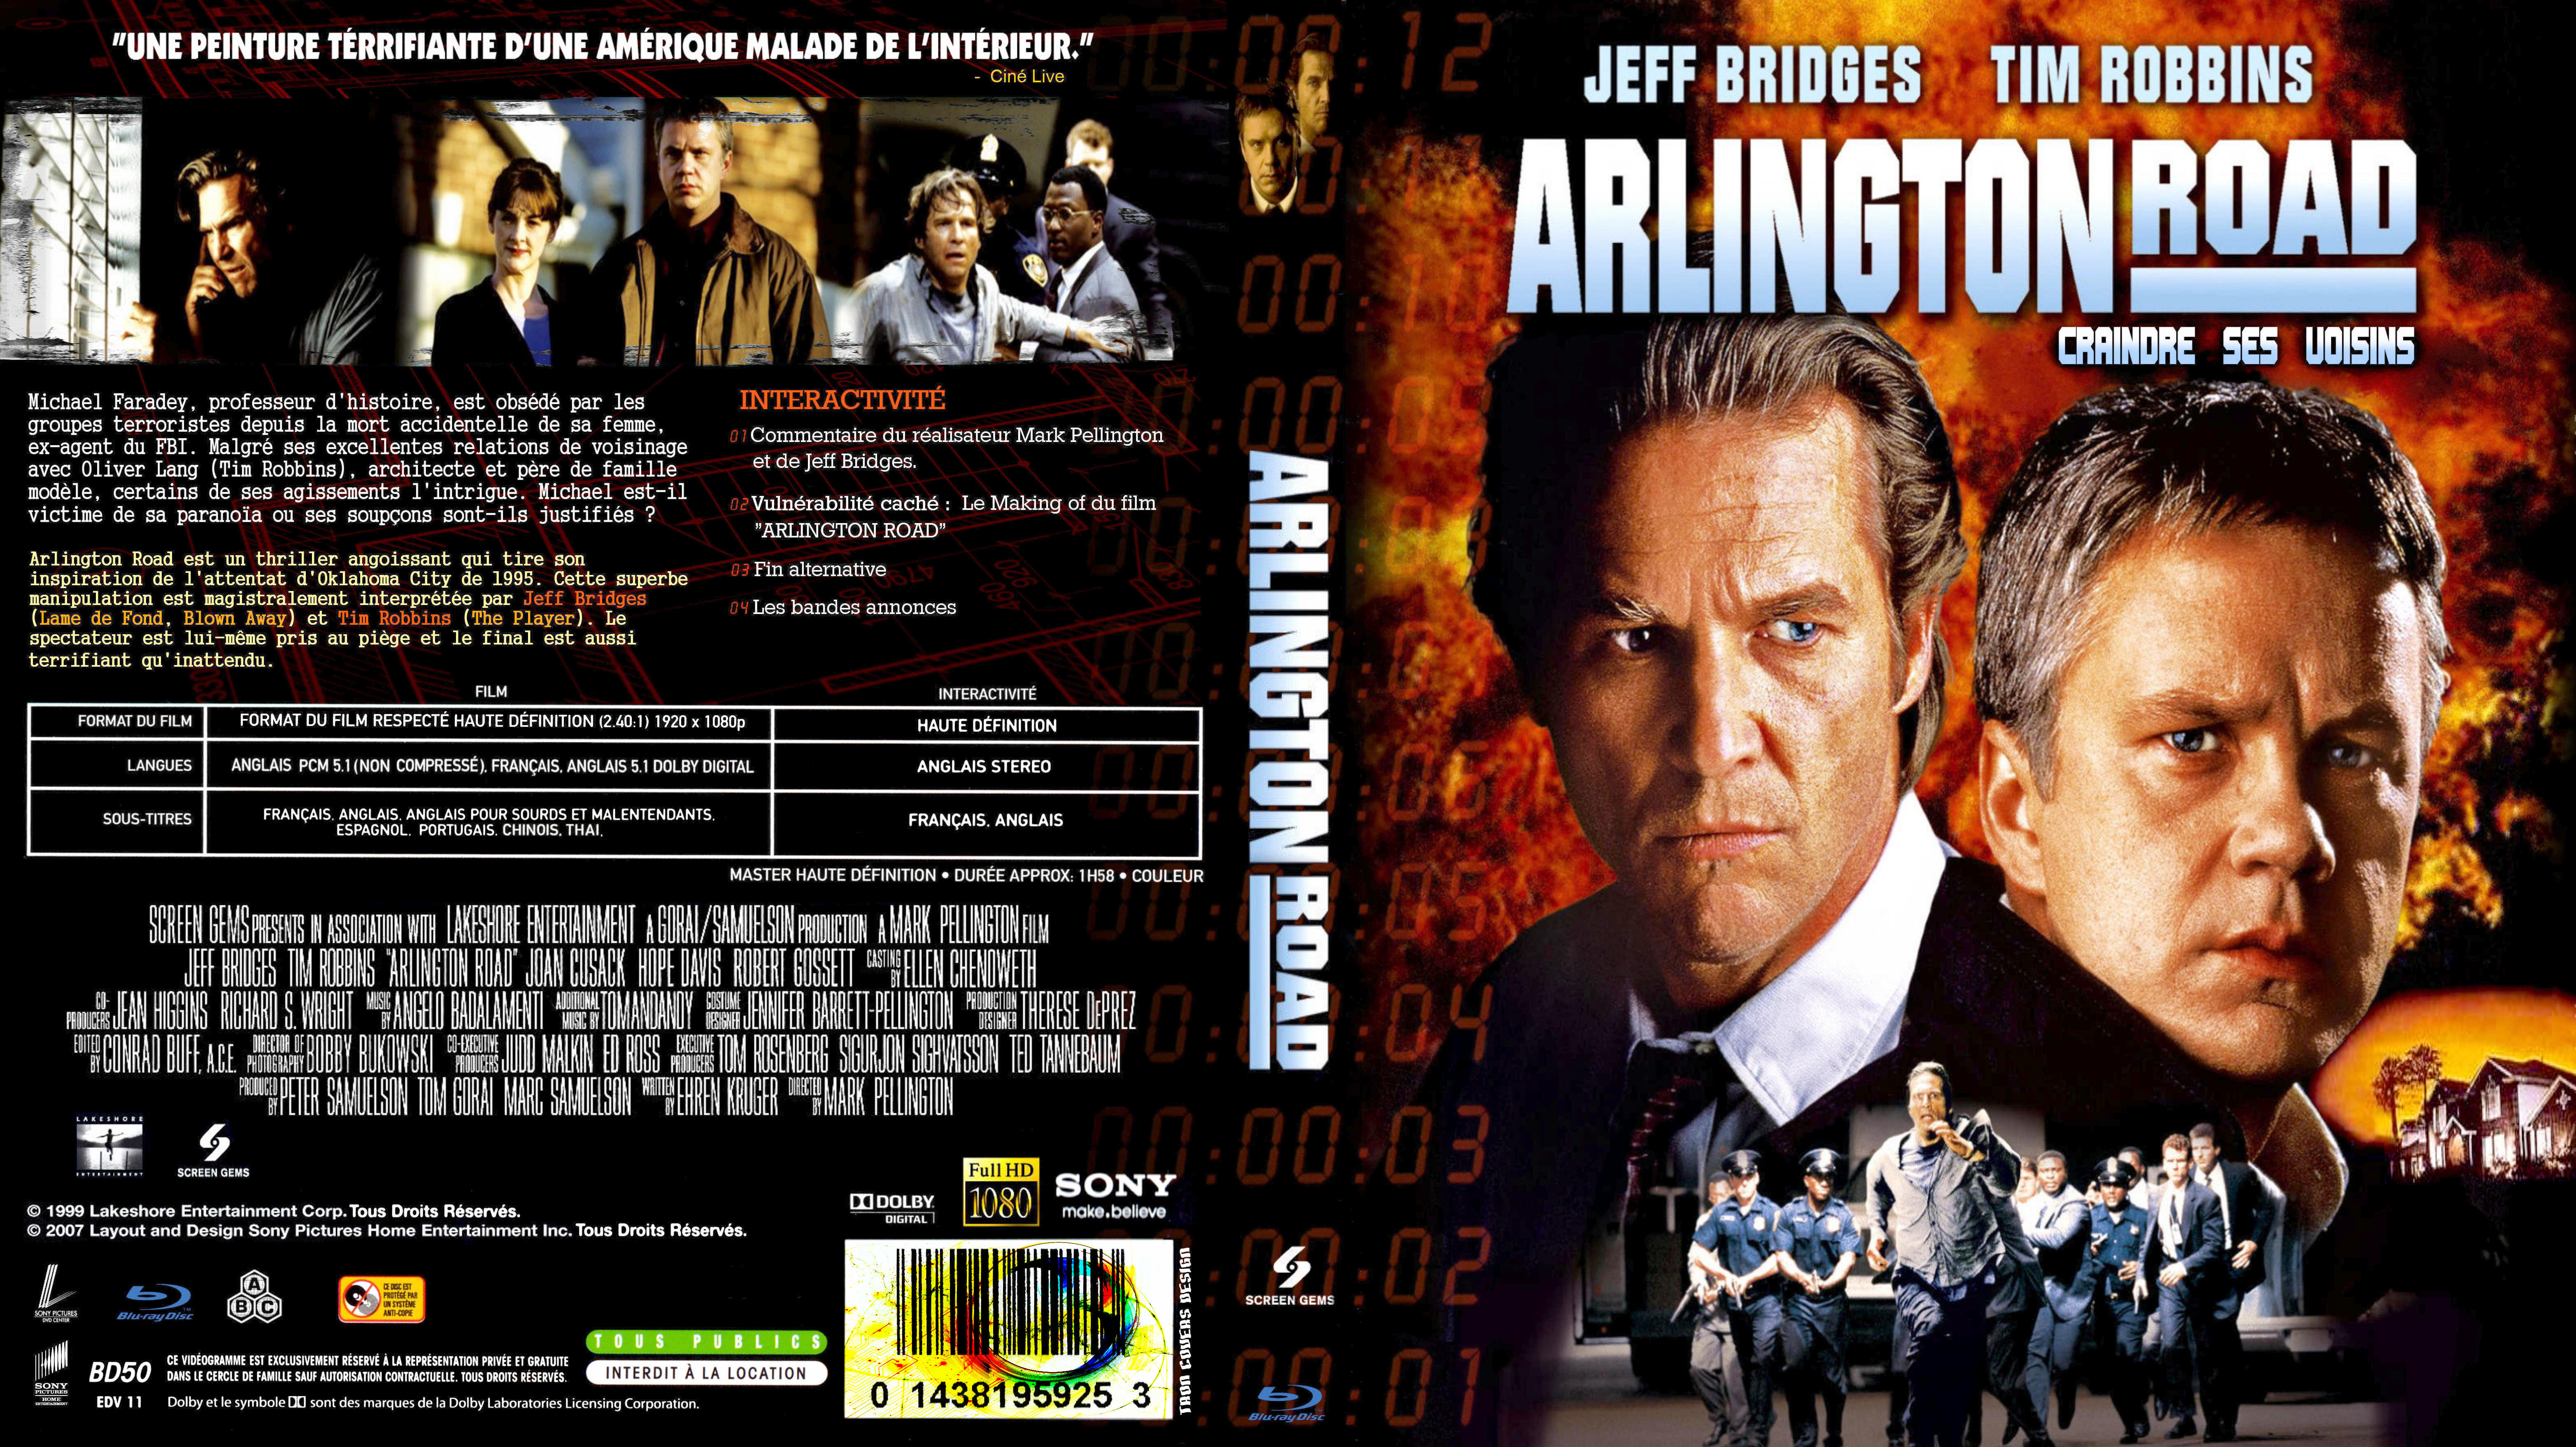 Jaquette DVD Arlington road custom (BLU-RAY)